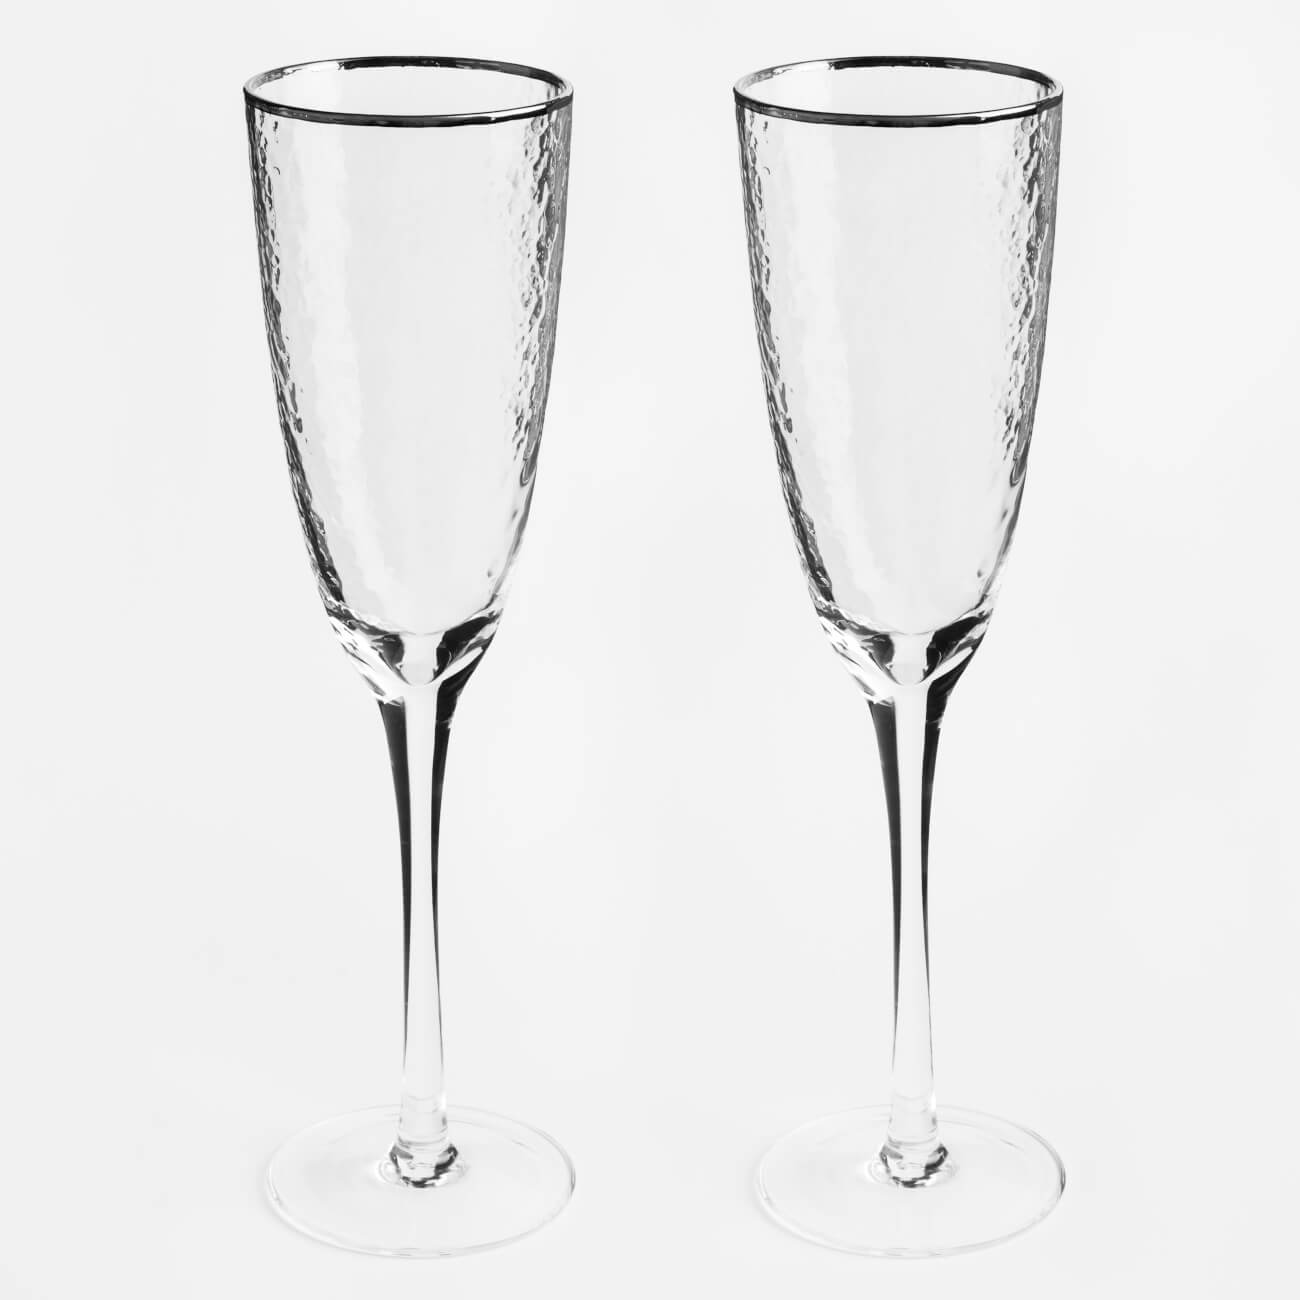 Бокал для шампанского, 275 мл, 2 шт, стекло, с серебристым кантом, Ripply silver бокал для шампанского 275 мл 2 шт стекло перламутр ripply polar